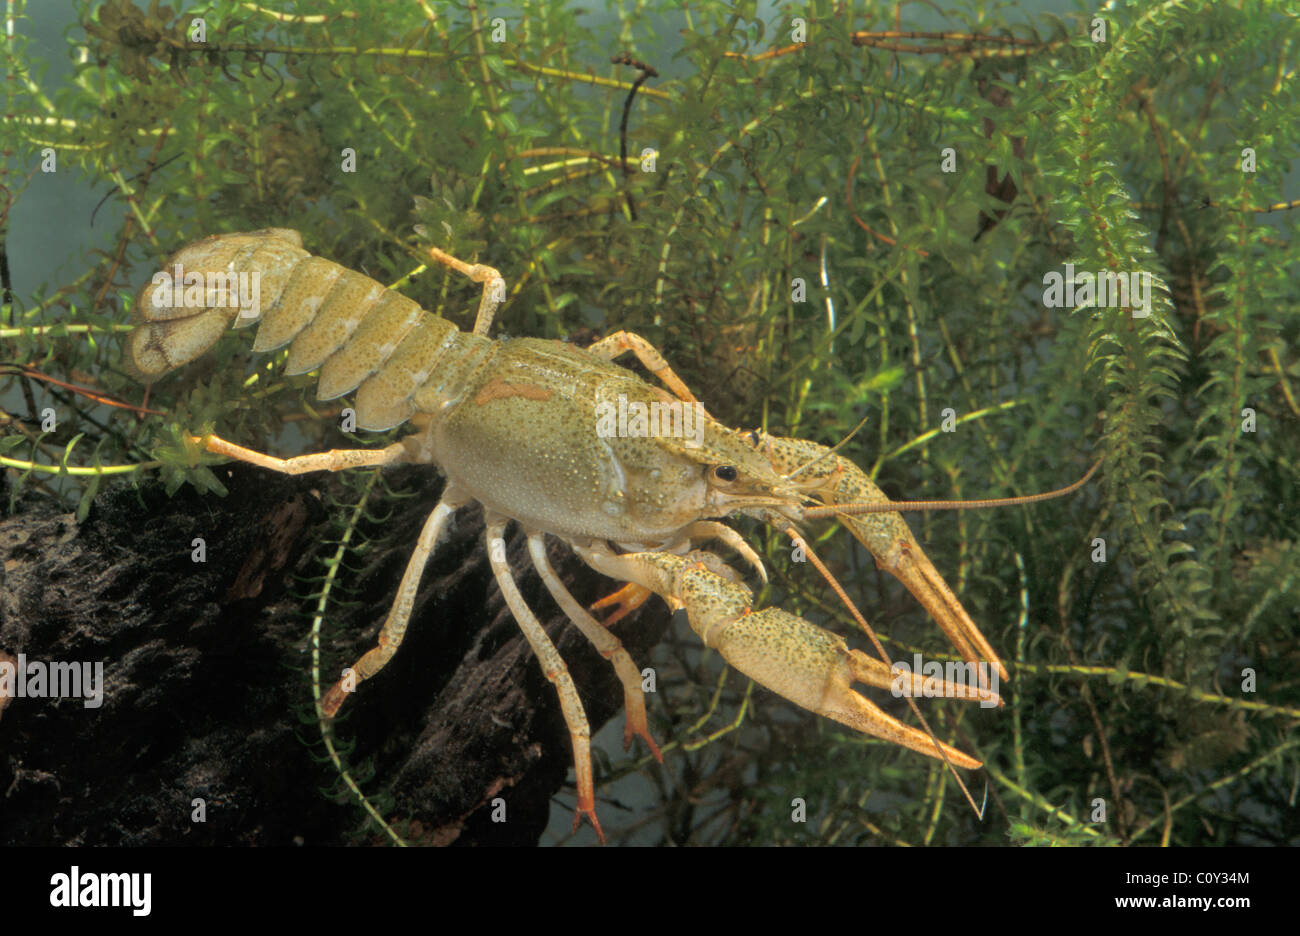 Turkish crayfish - Narrow-clawed crayfish - Galician crayfish - Danube crayfish (Astacus leptodactylus) underwater Stock Photo